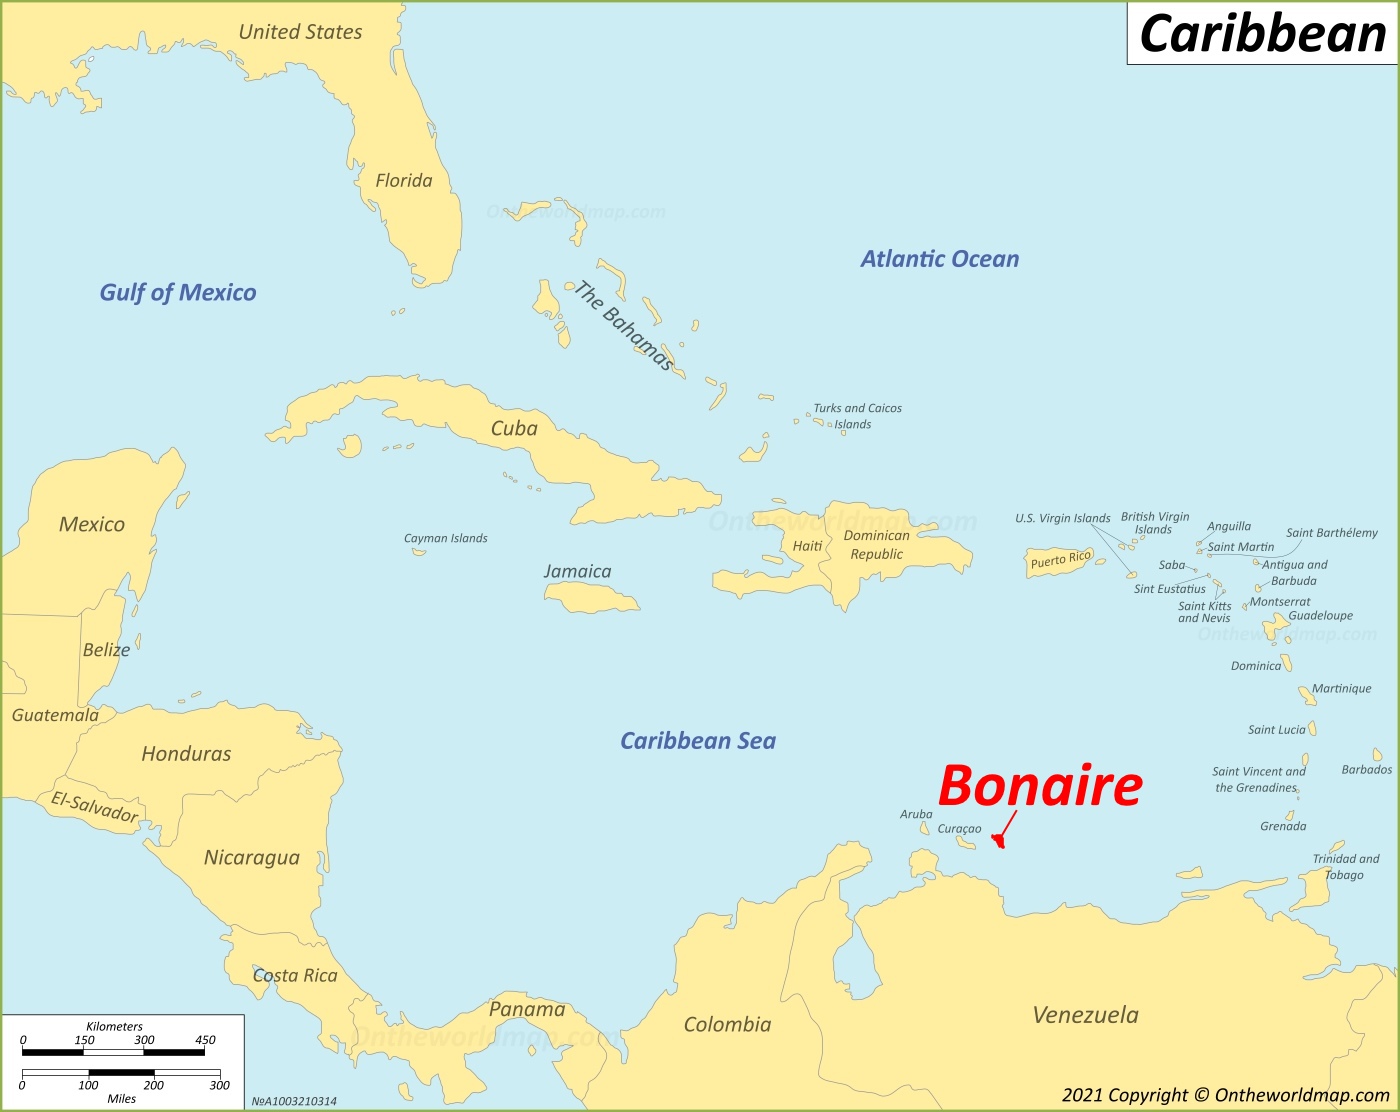 Bonaire location on the Caribbean Map